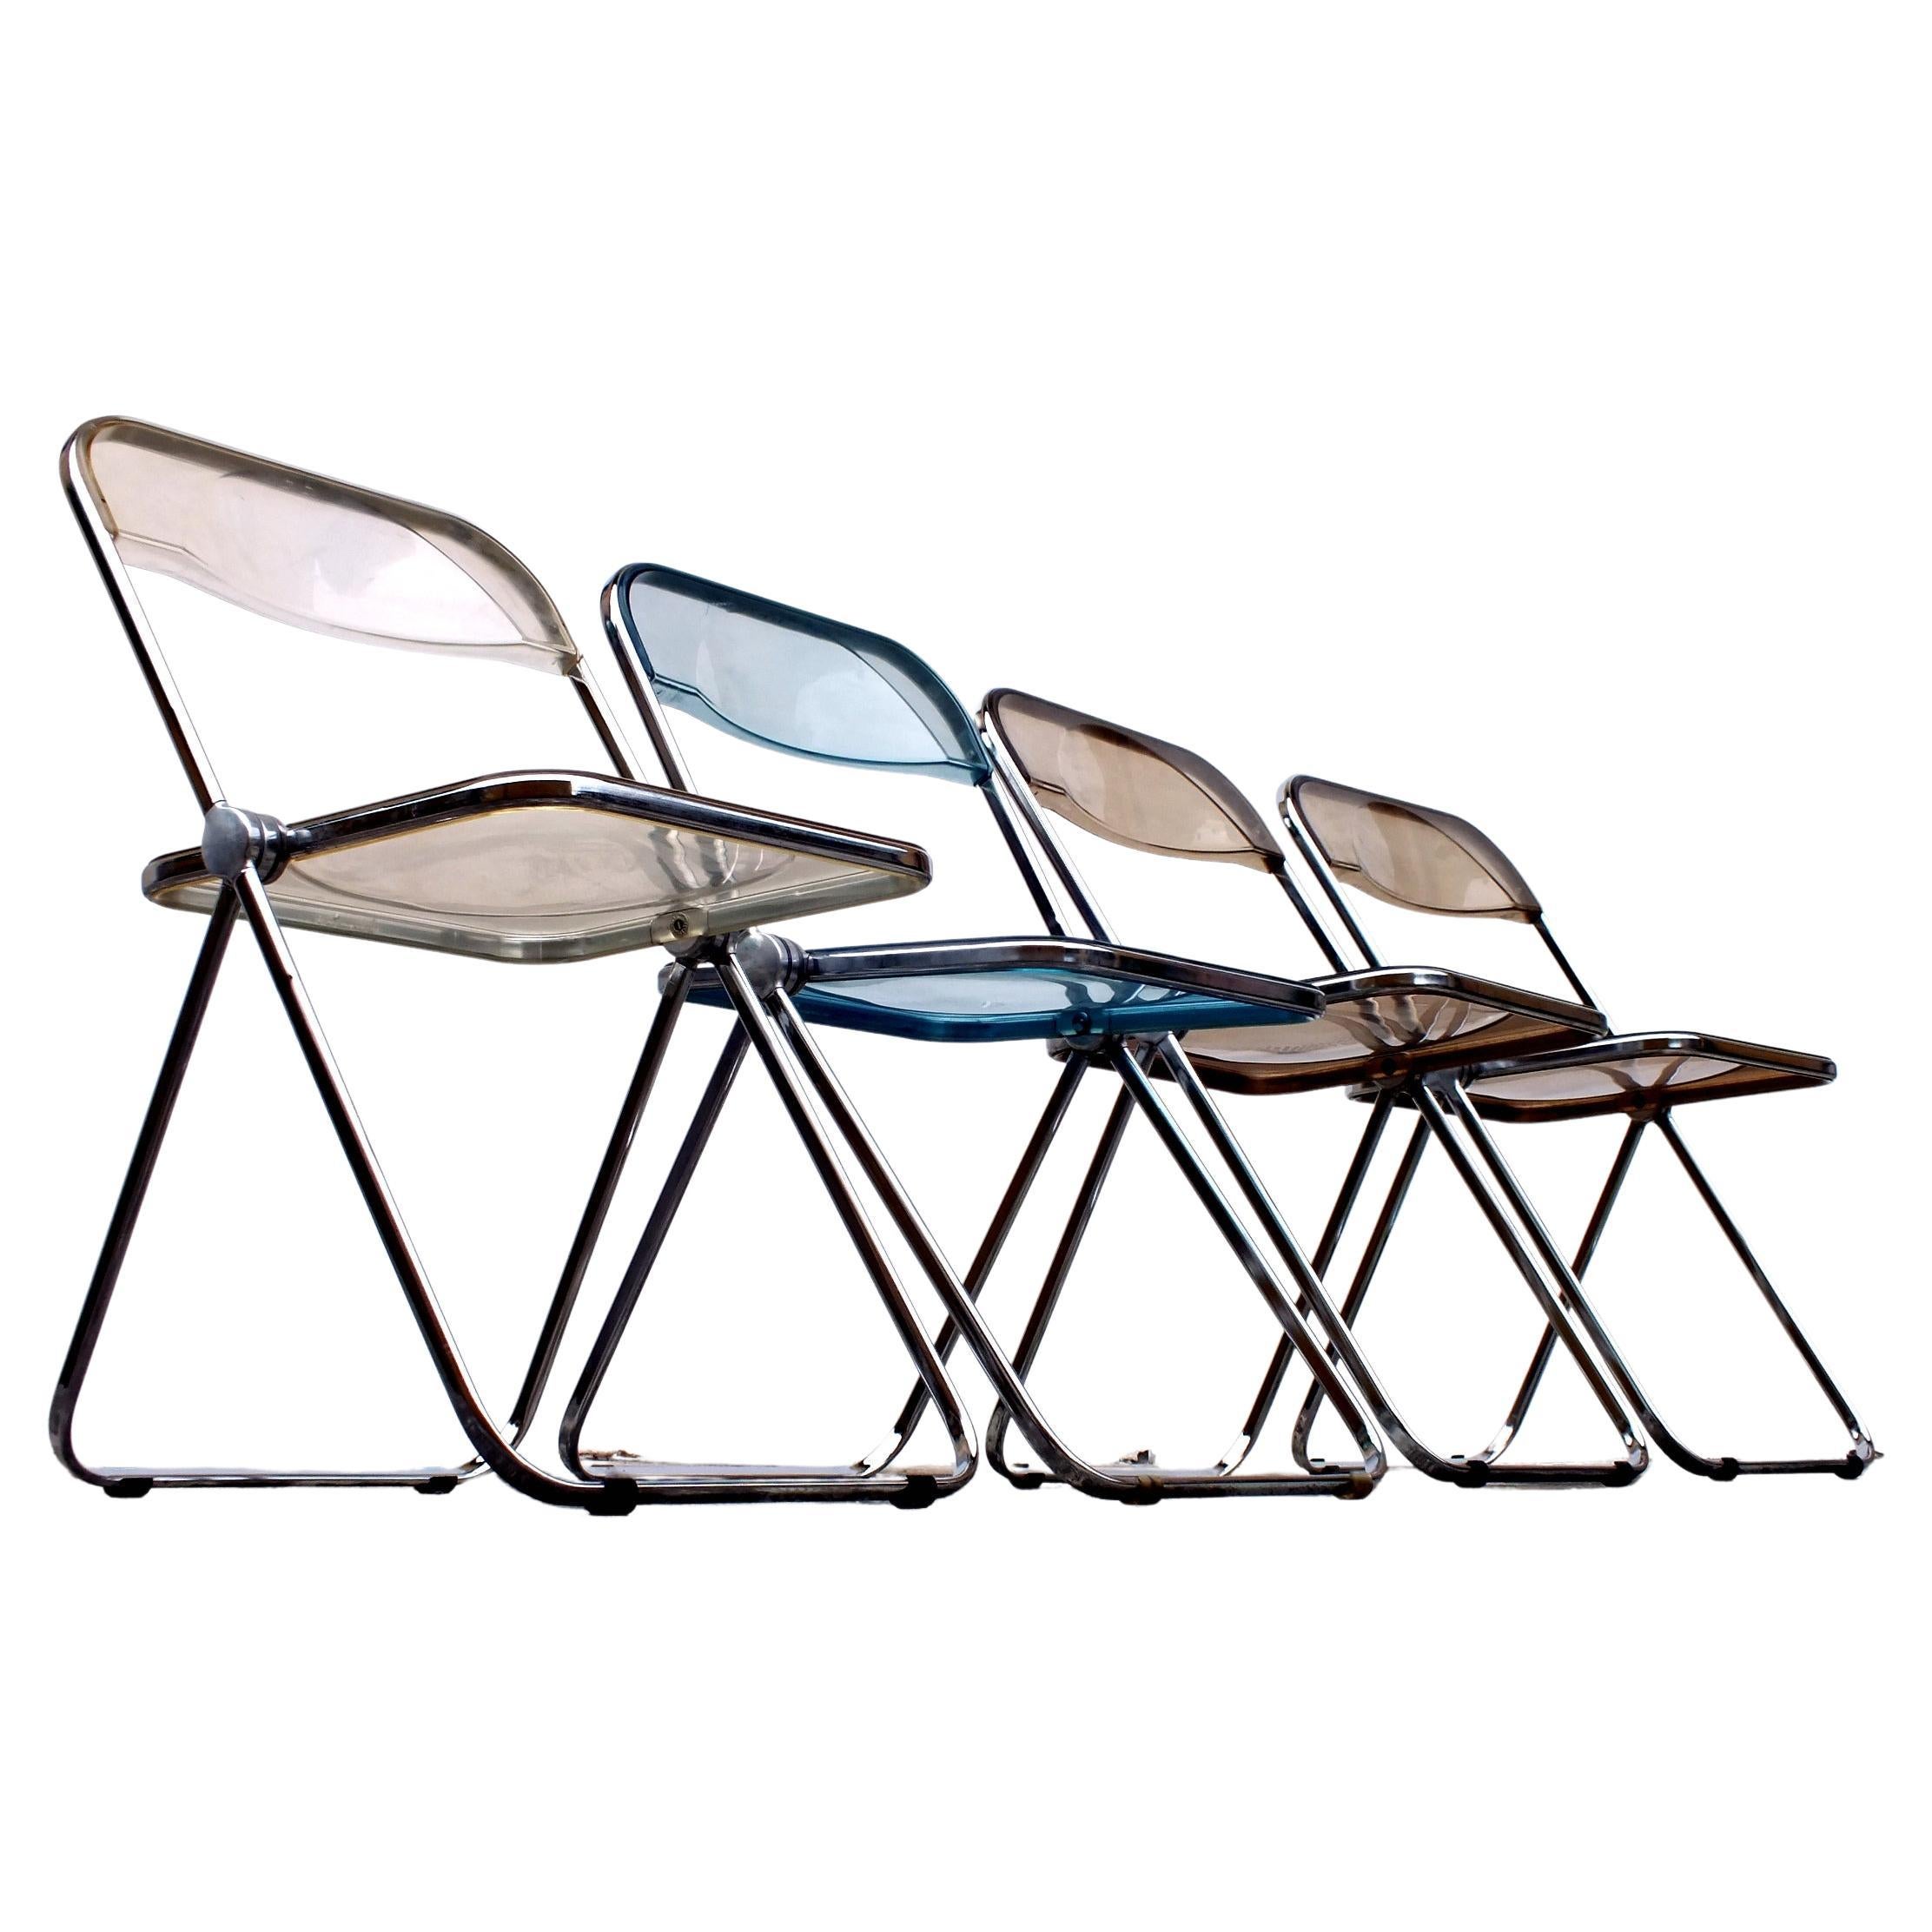 Piretti Giancarlo Design for Anonima Castelli in Years 1970 Four Plia Chairs For Sale